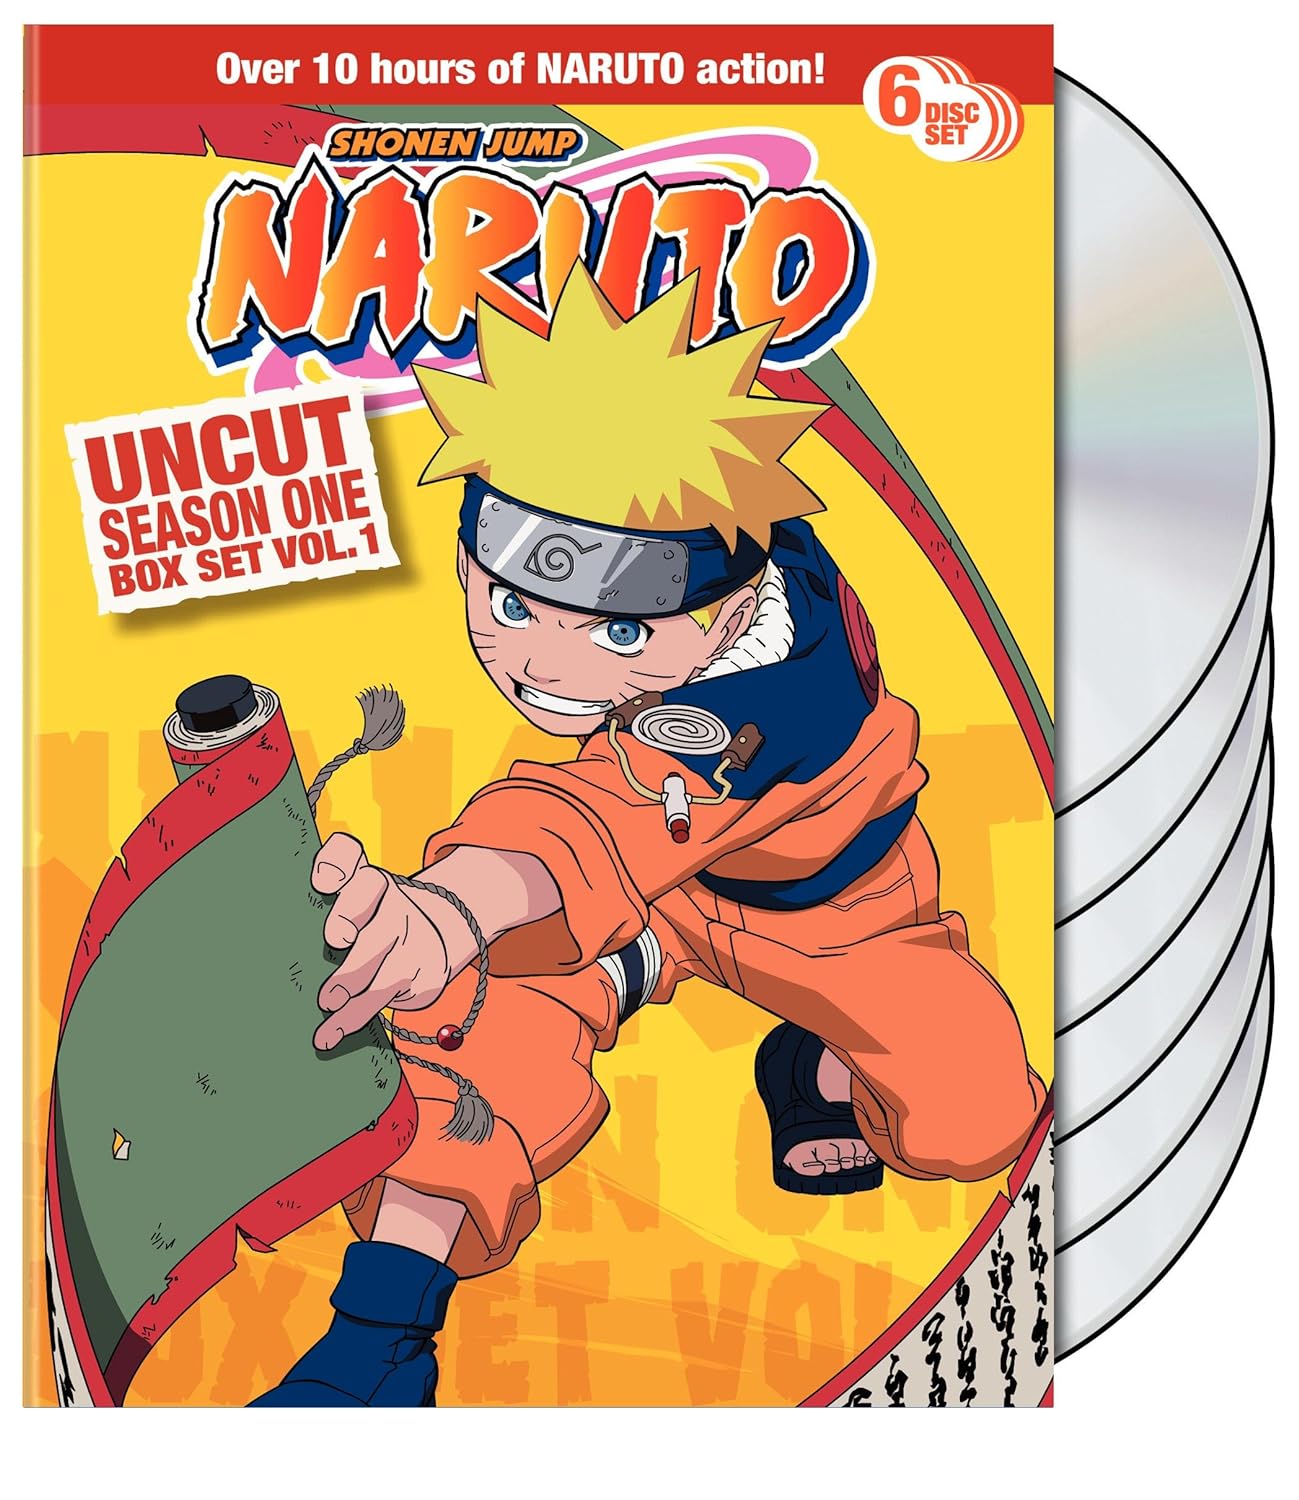 Naruto Uncut Season One Box Set Vol. 1